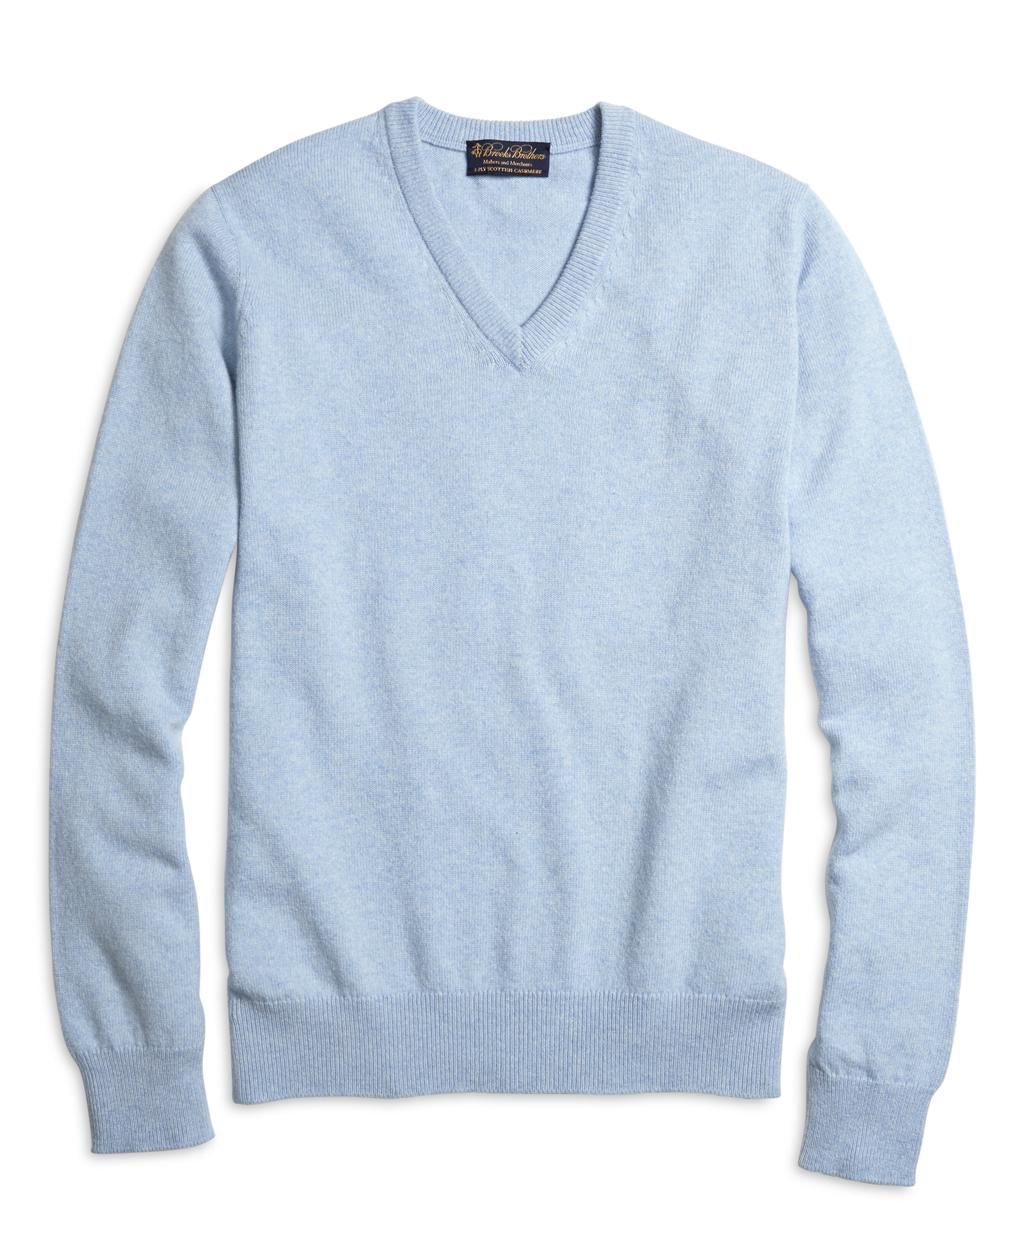 Brooks Brothers Cashmere V-neck Sweater in Light Blue (Blue) for Men - Lyst